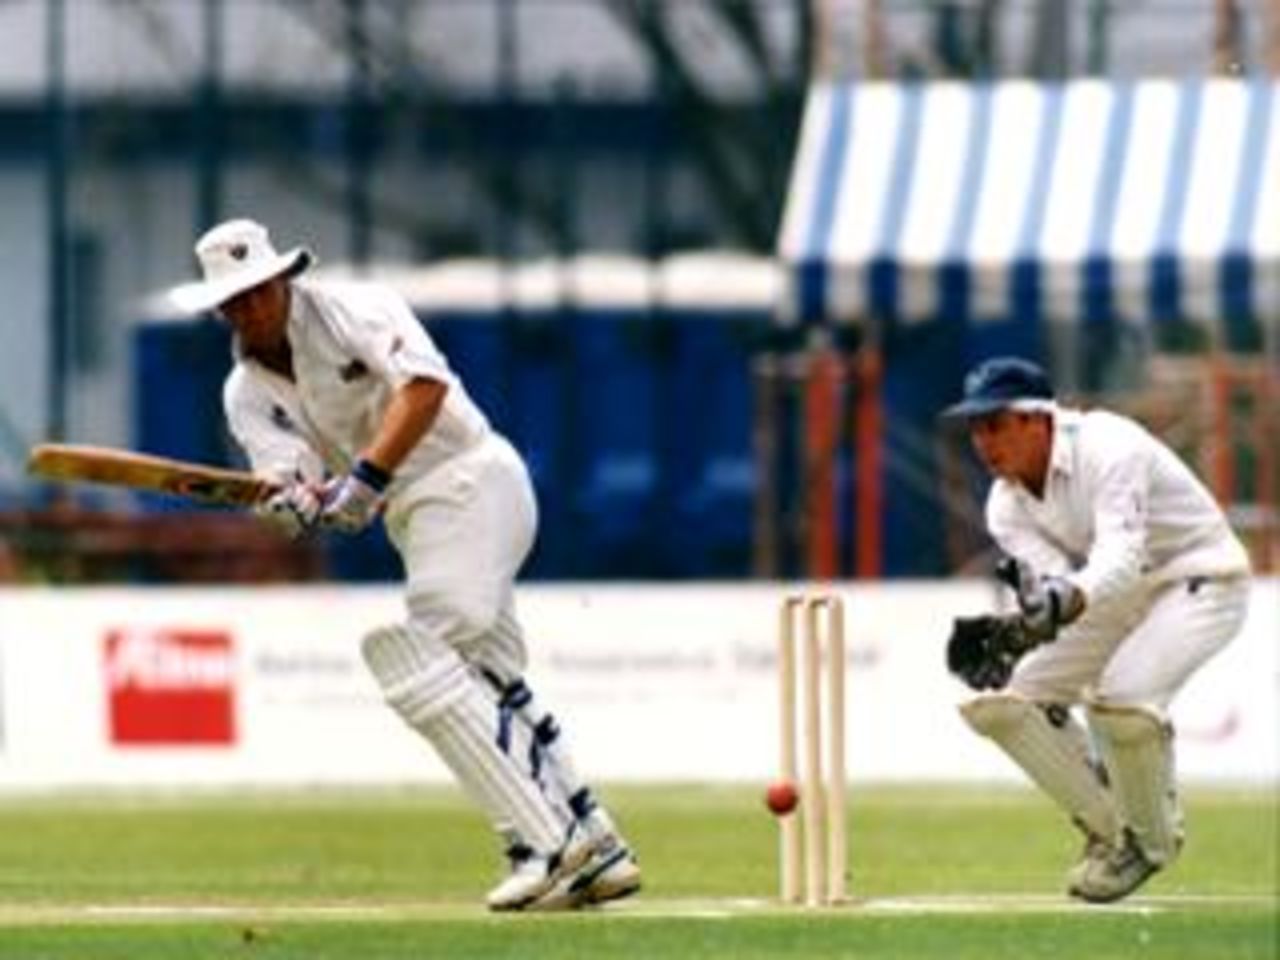 Scotland's Mike Smith batting against Ireland in the ICC Trophy semi-final, Kuala Lumpur 1997